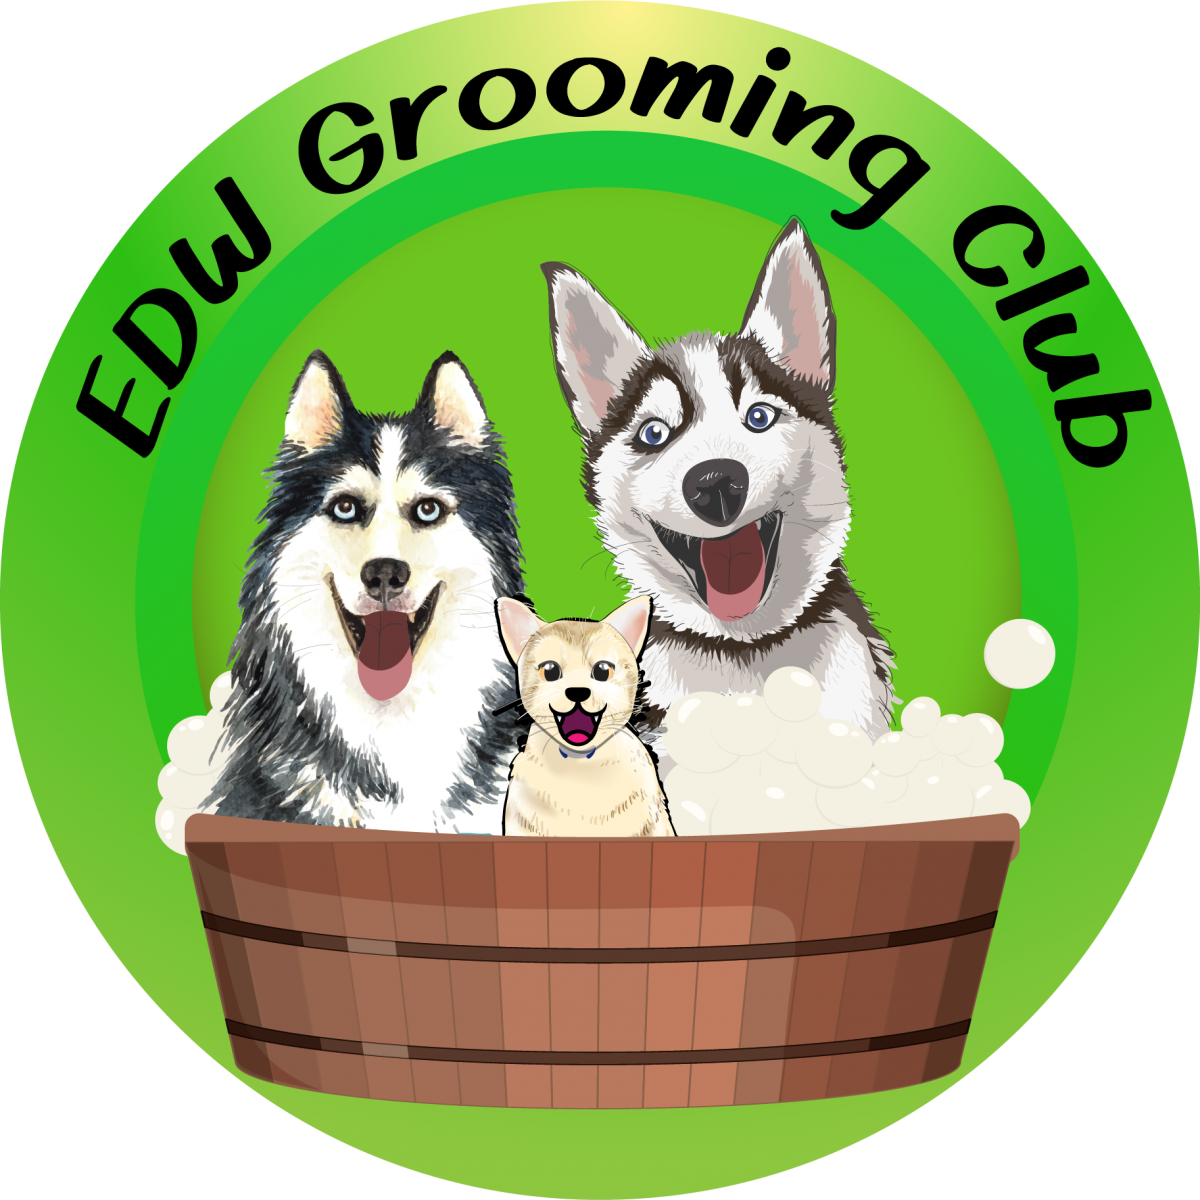 EDW Grooming Club